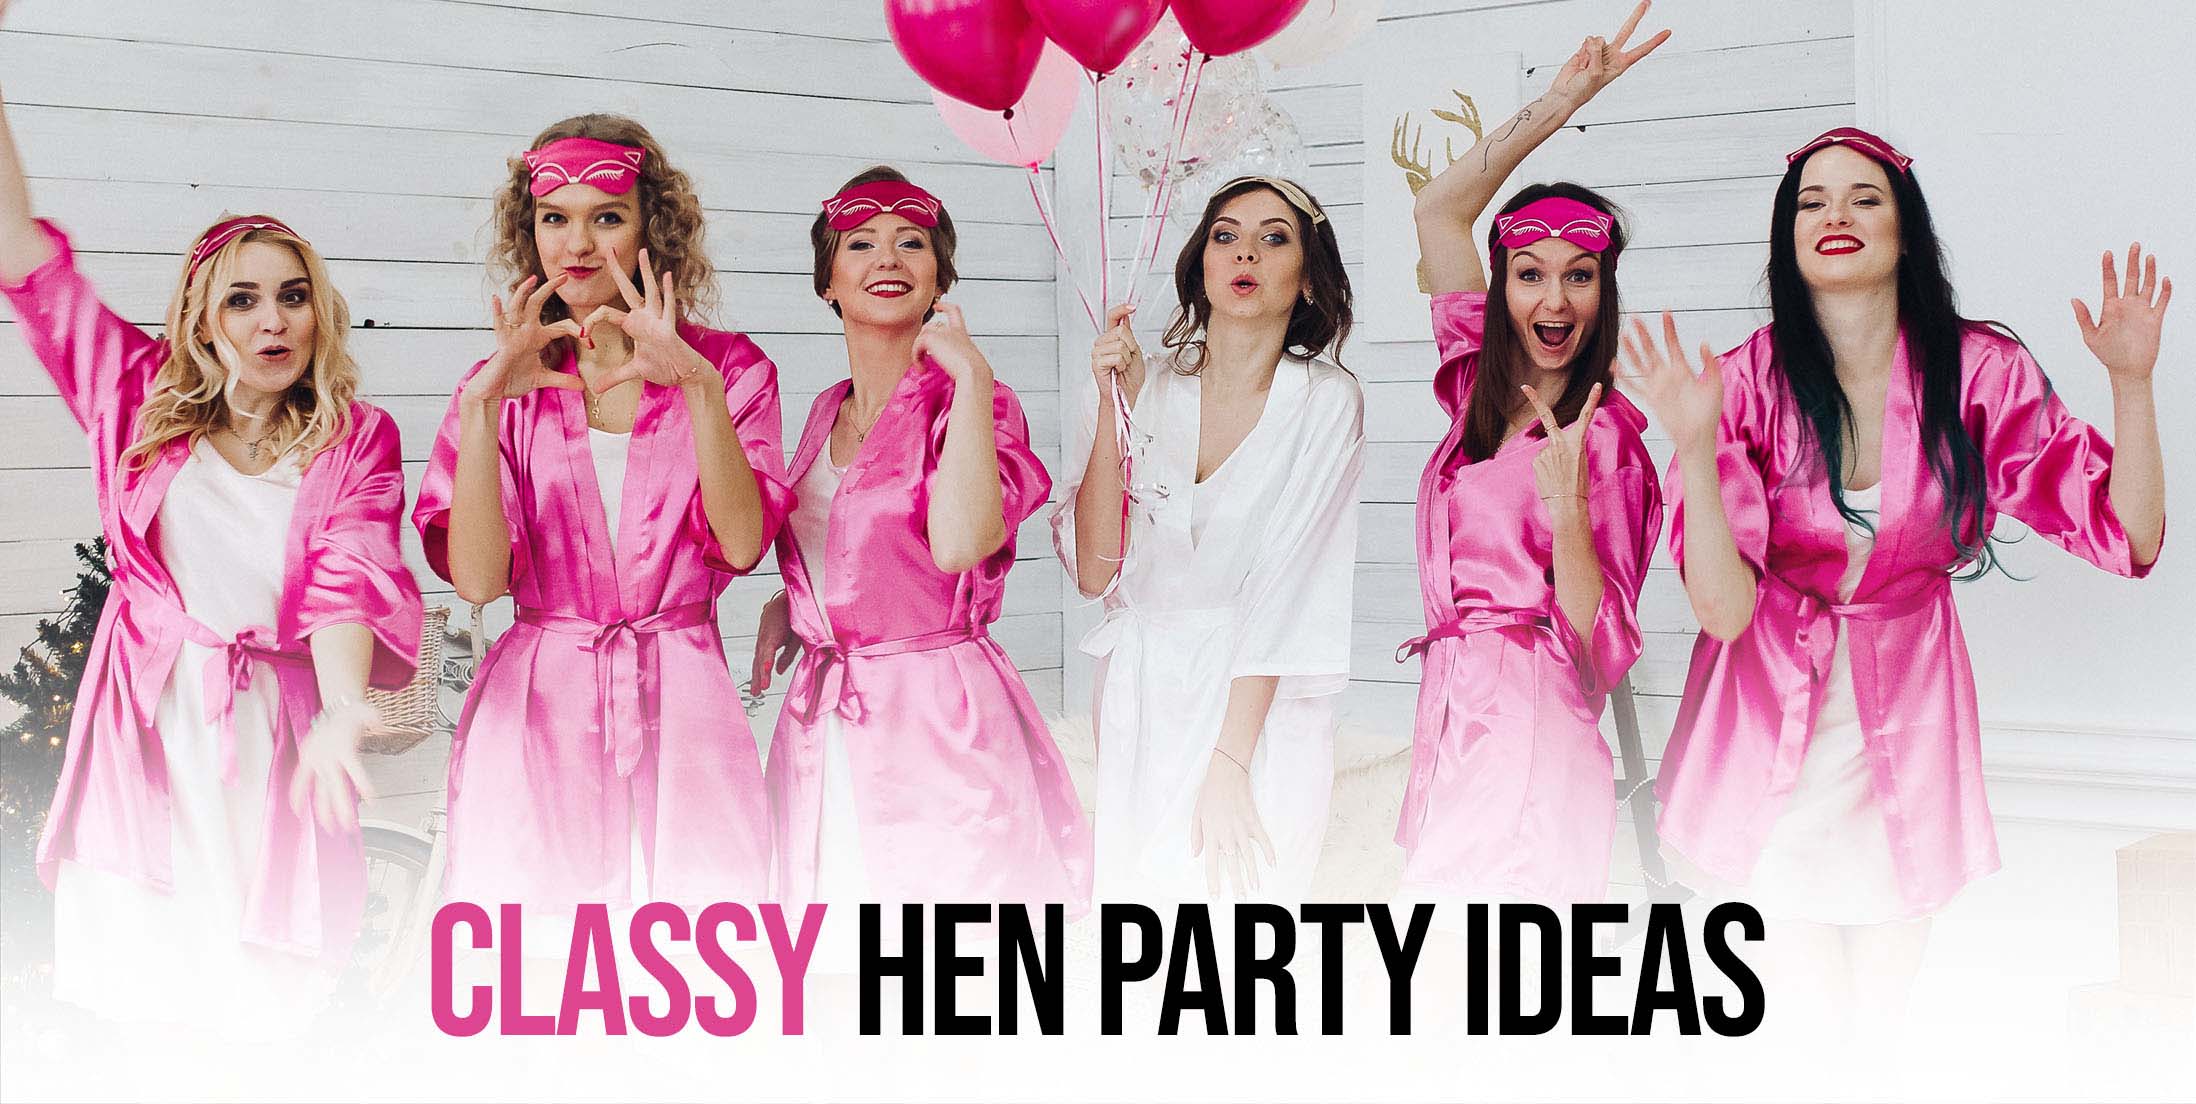 Classy Hen Party Ideas